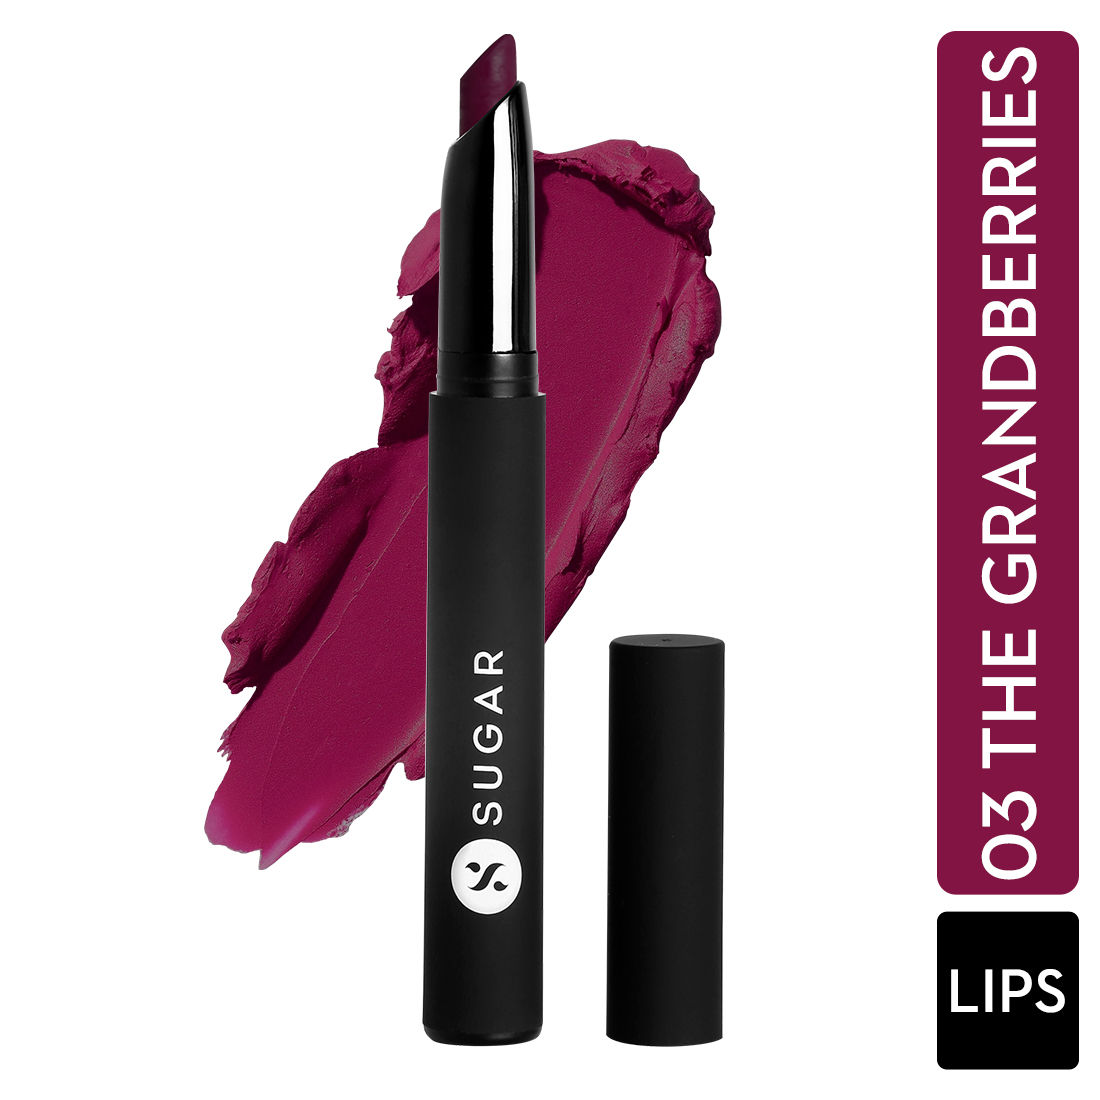 Buy SUGAR Cosmetics - Matte Attack - Transferproof Lipstick - 03 The Grandberries (Dark Berry) - 2 gms - Transferproof Lipstick Matte Finish, Lasts Up to 8 hours - Purplle